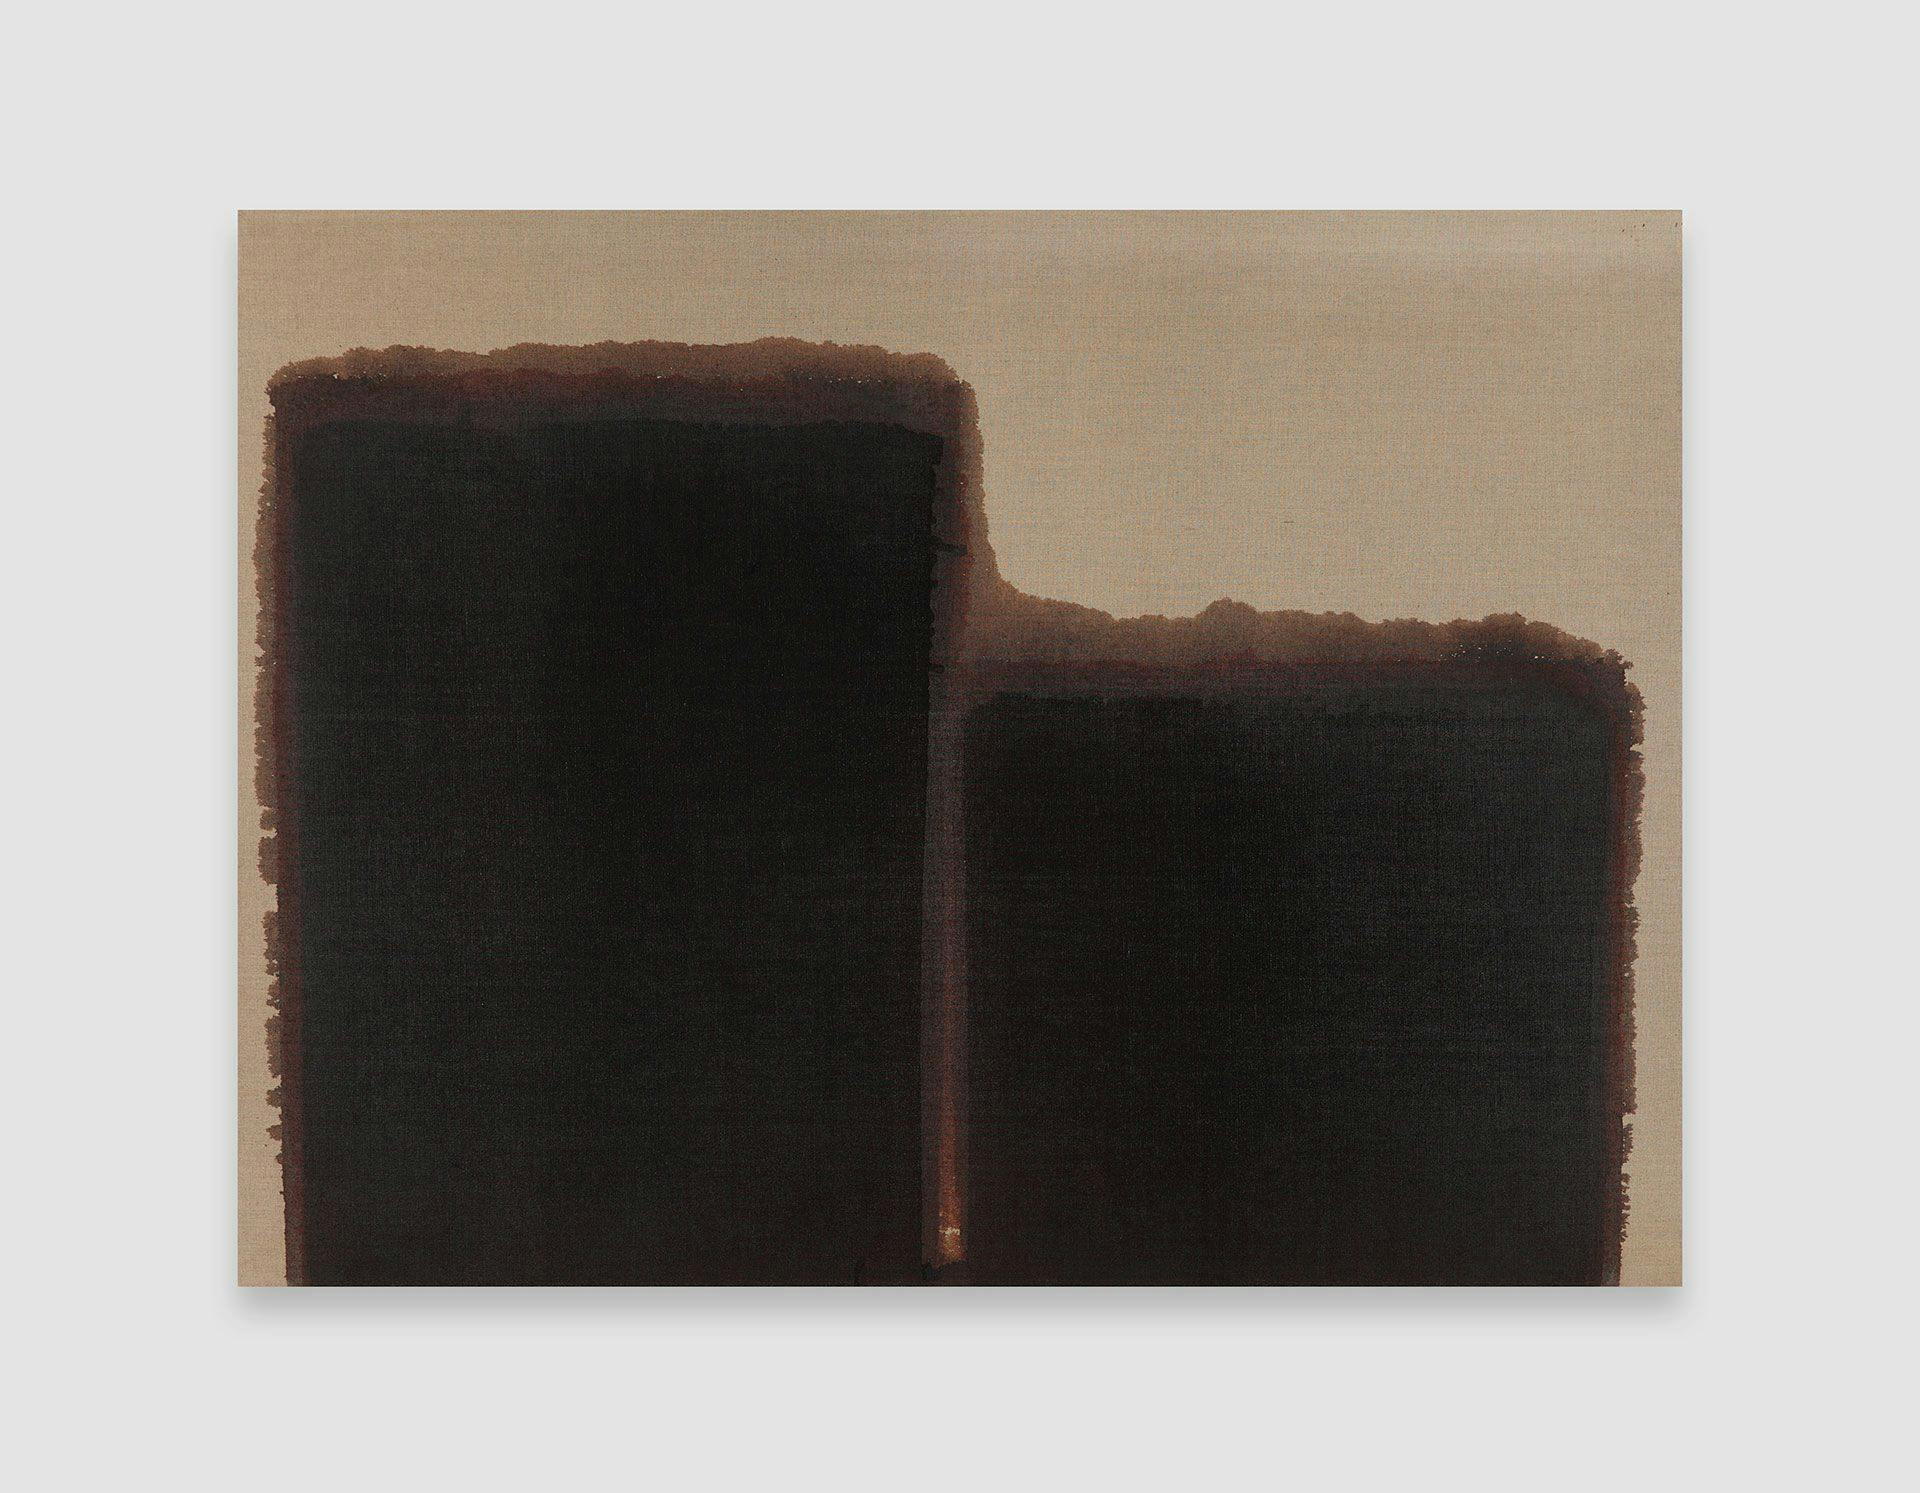 A painting by Yun Hyong-keun, titled Burnt Umber & Ultramarine, dated 1991.